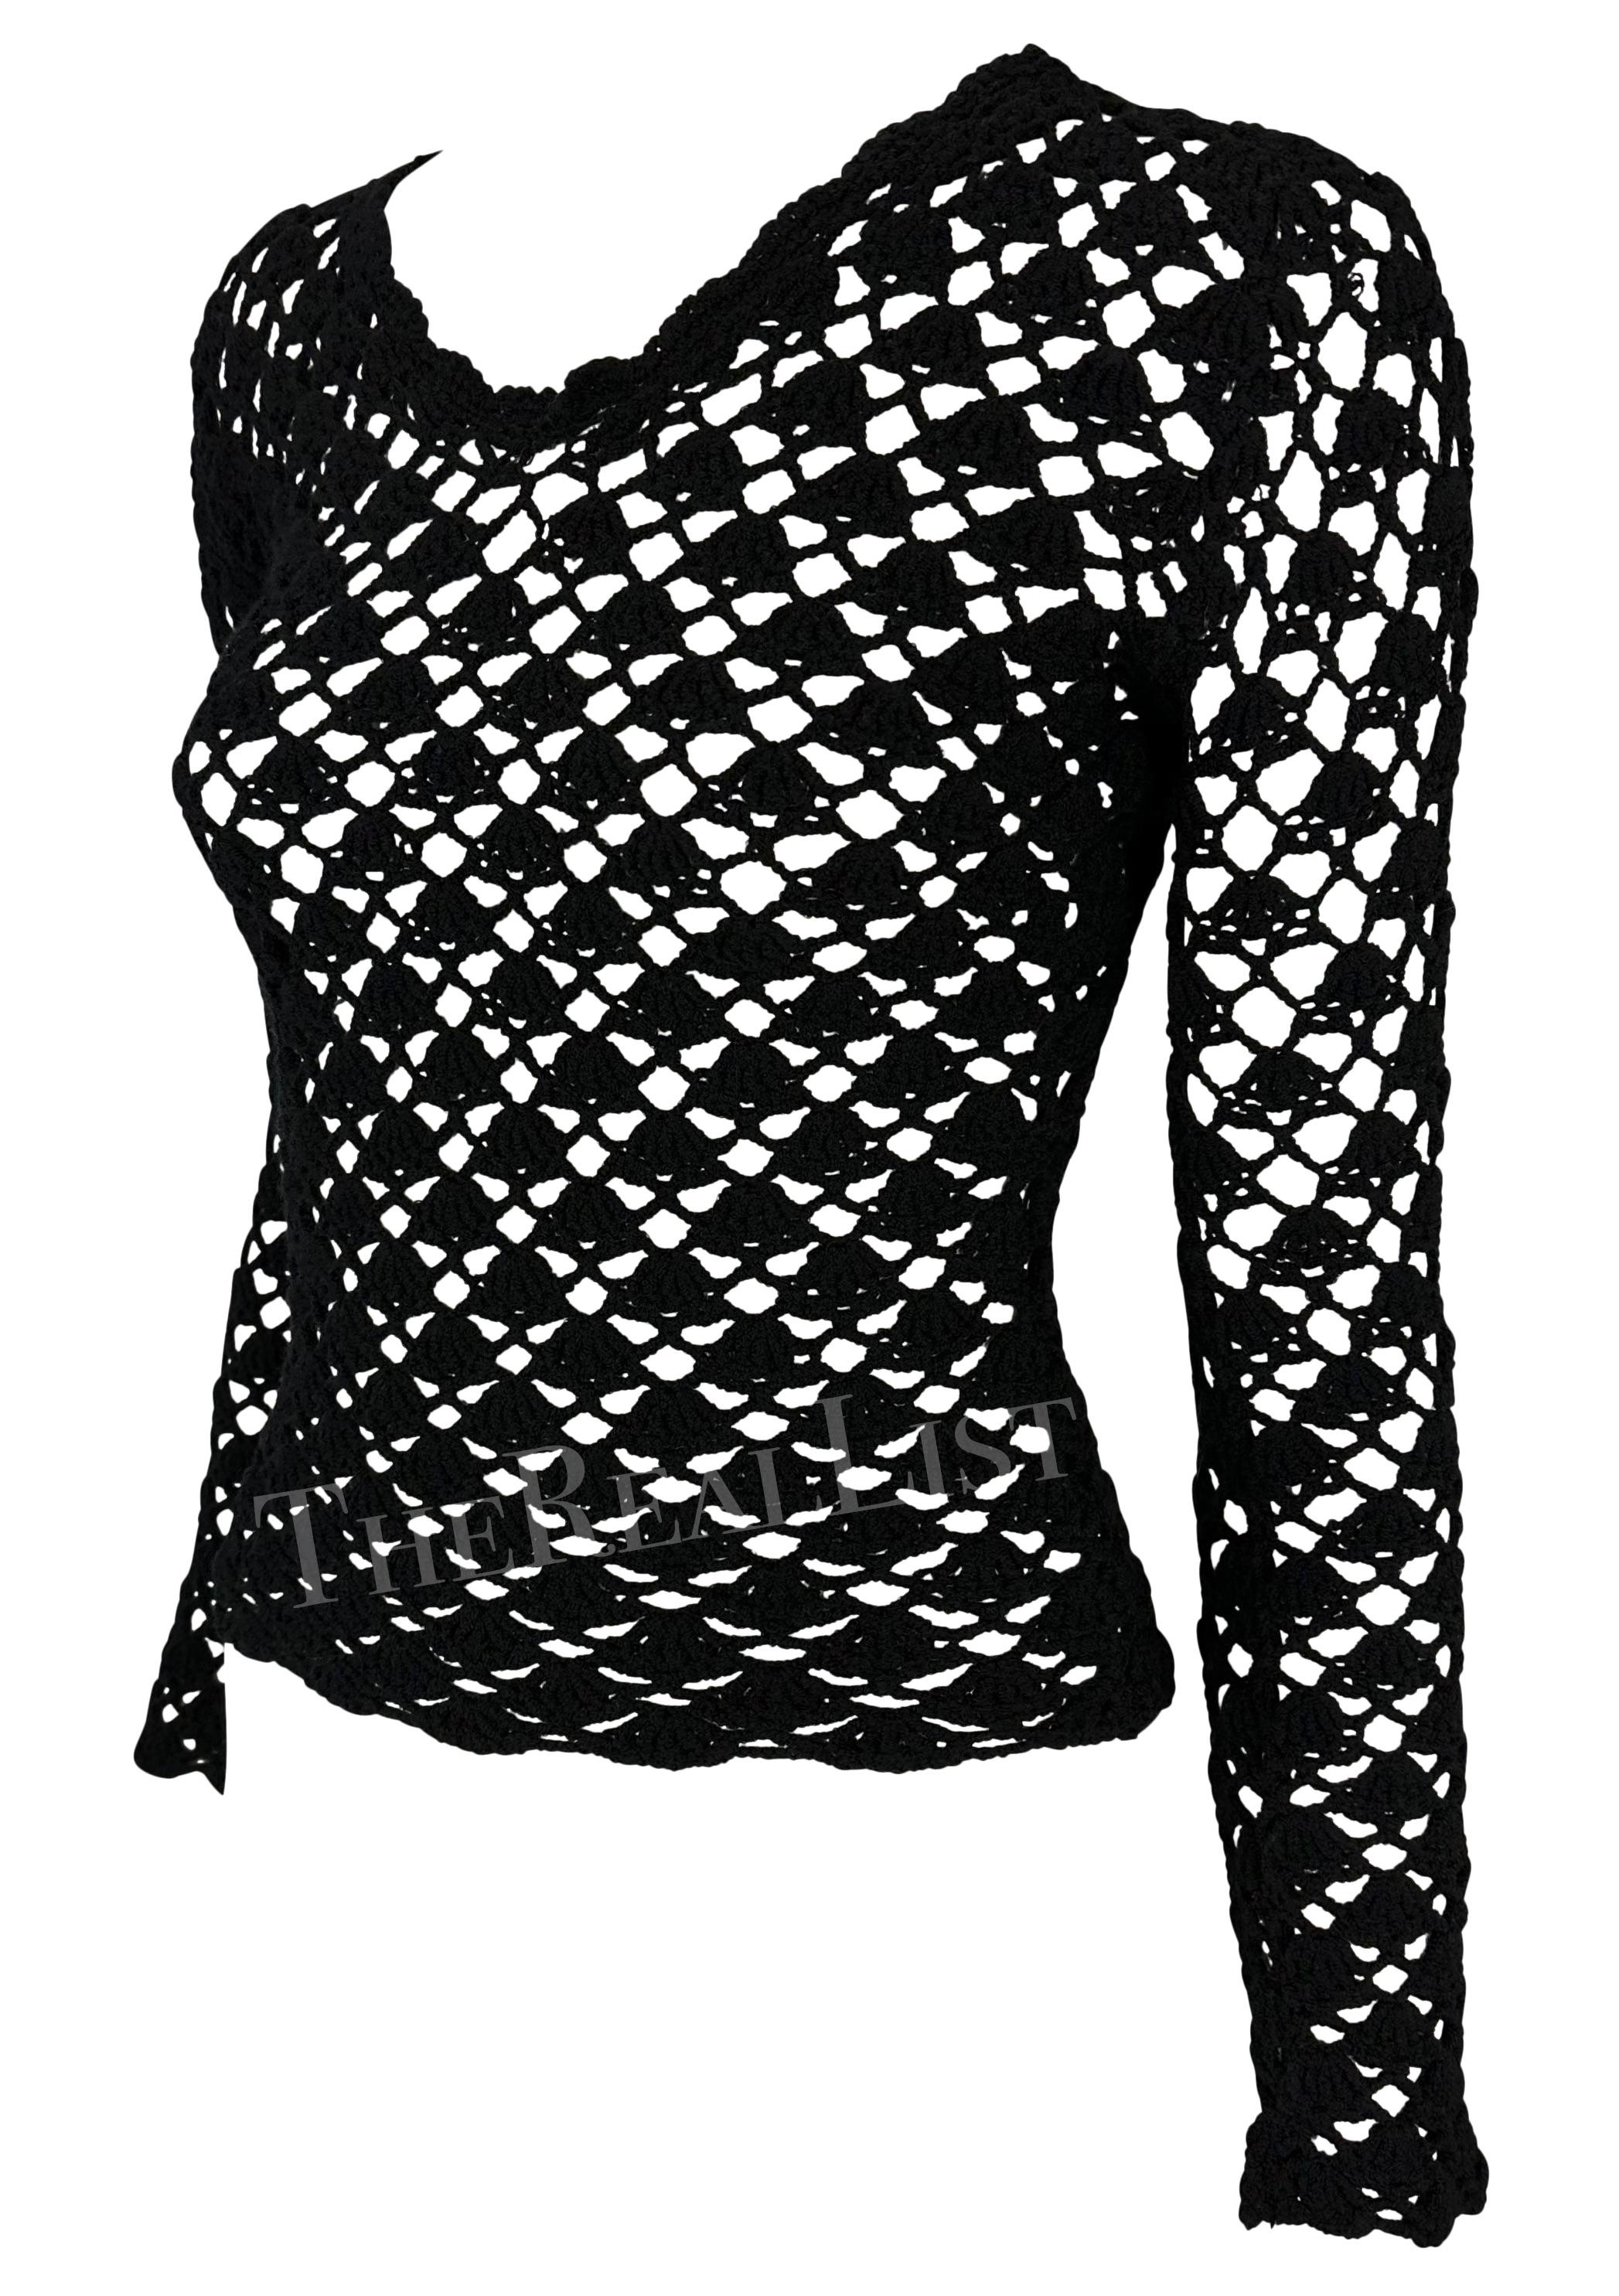 Women's S/S 1997 Dolce & Gabbana Black Crochet Sheer Sweater Top For Sale